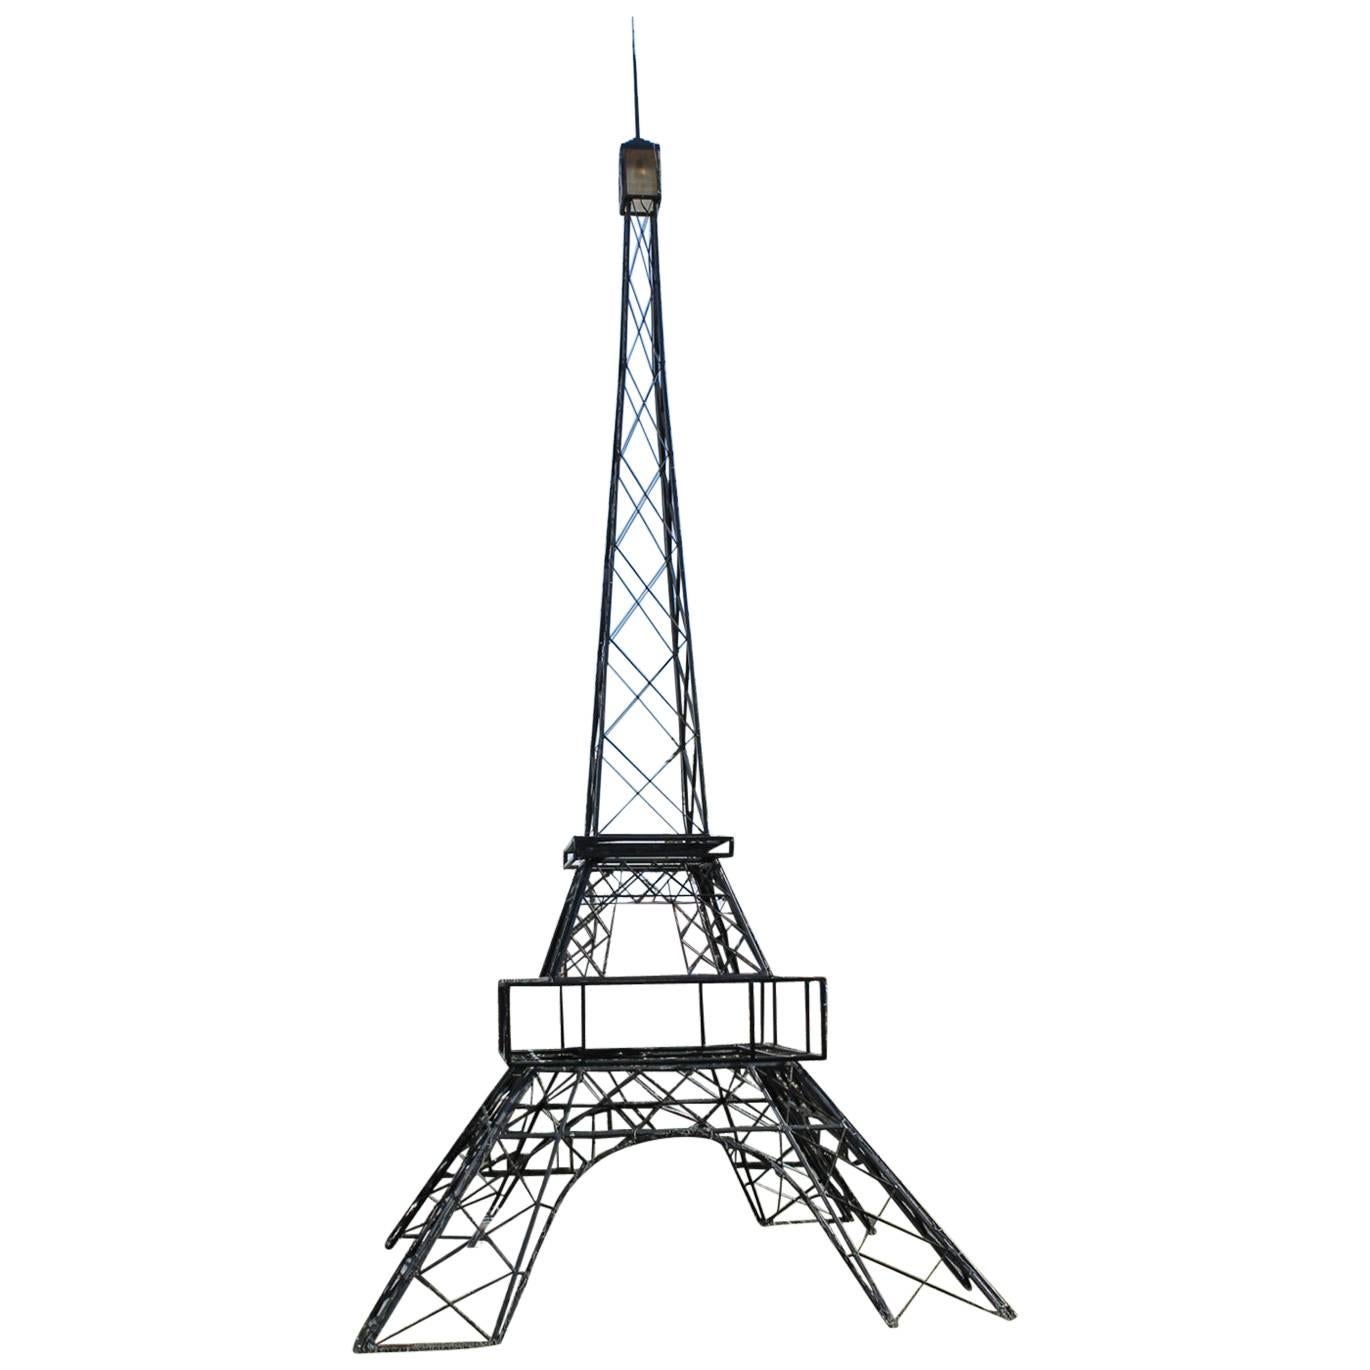 Eiffelturm im Vintage-Stil